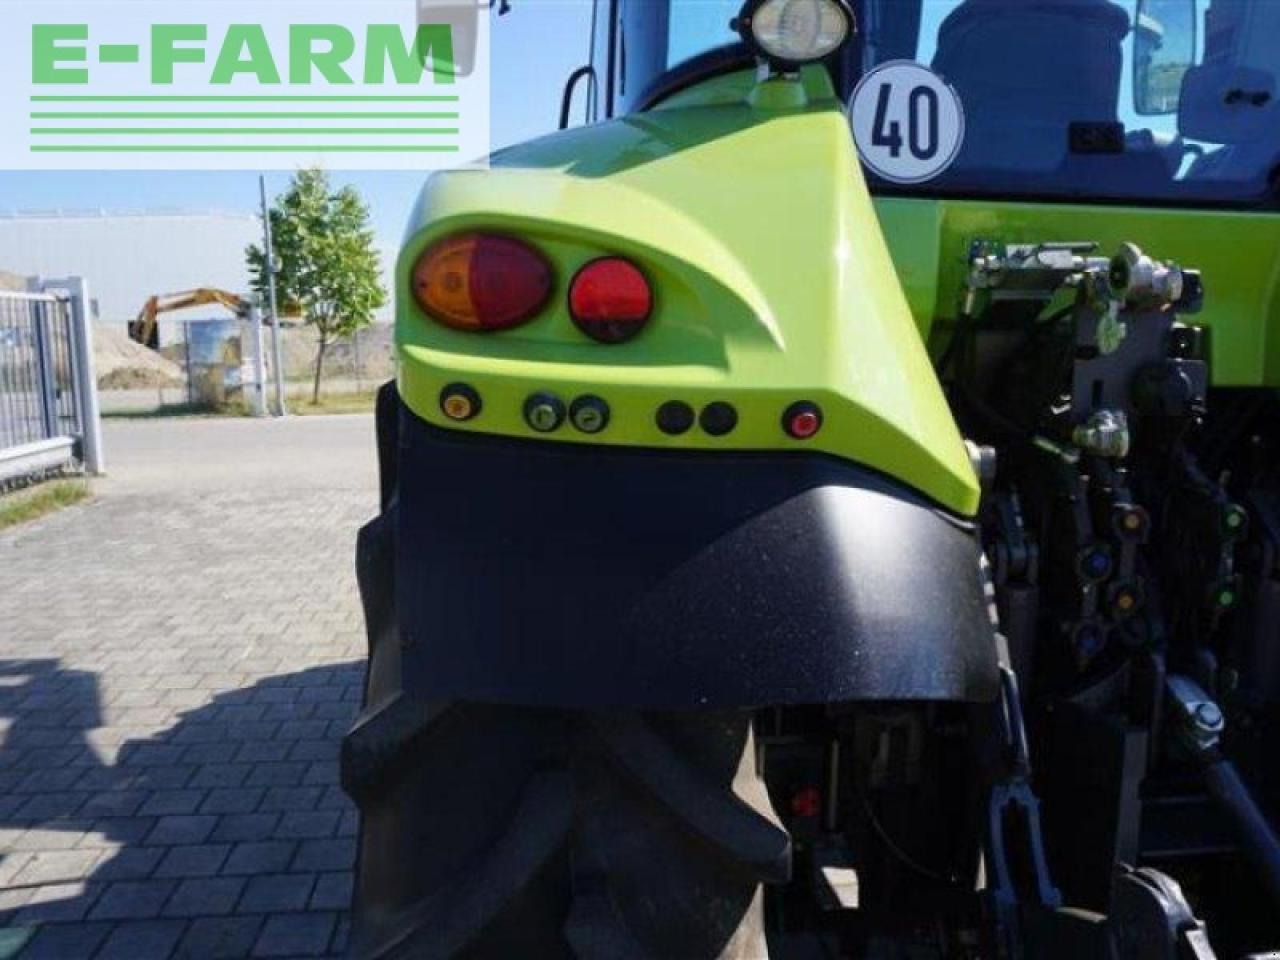 Farm tractor CLAAS arion 520 cis